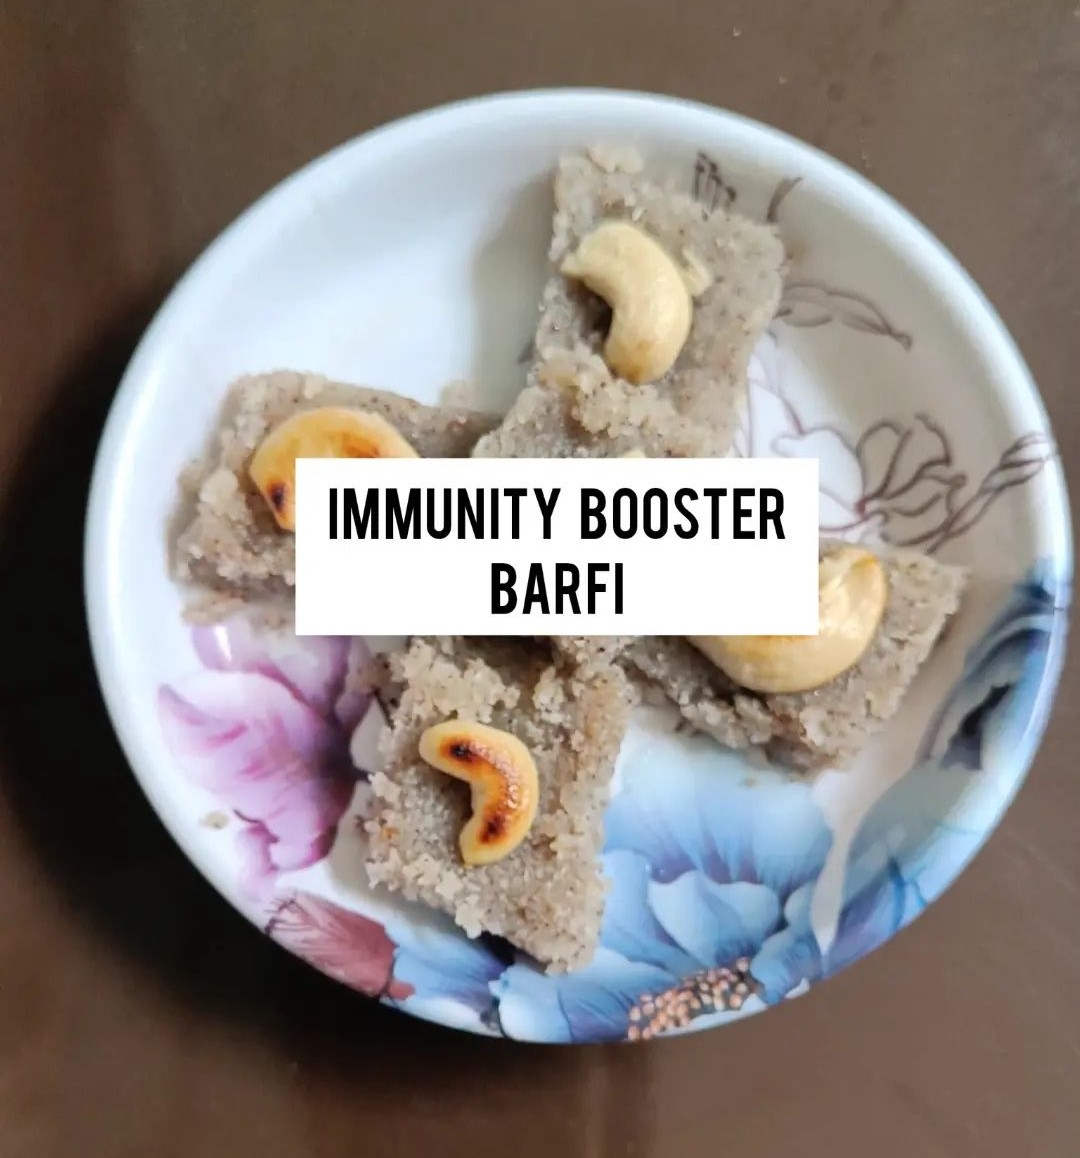 Immunity booster barfi